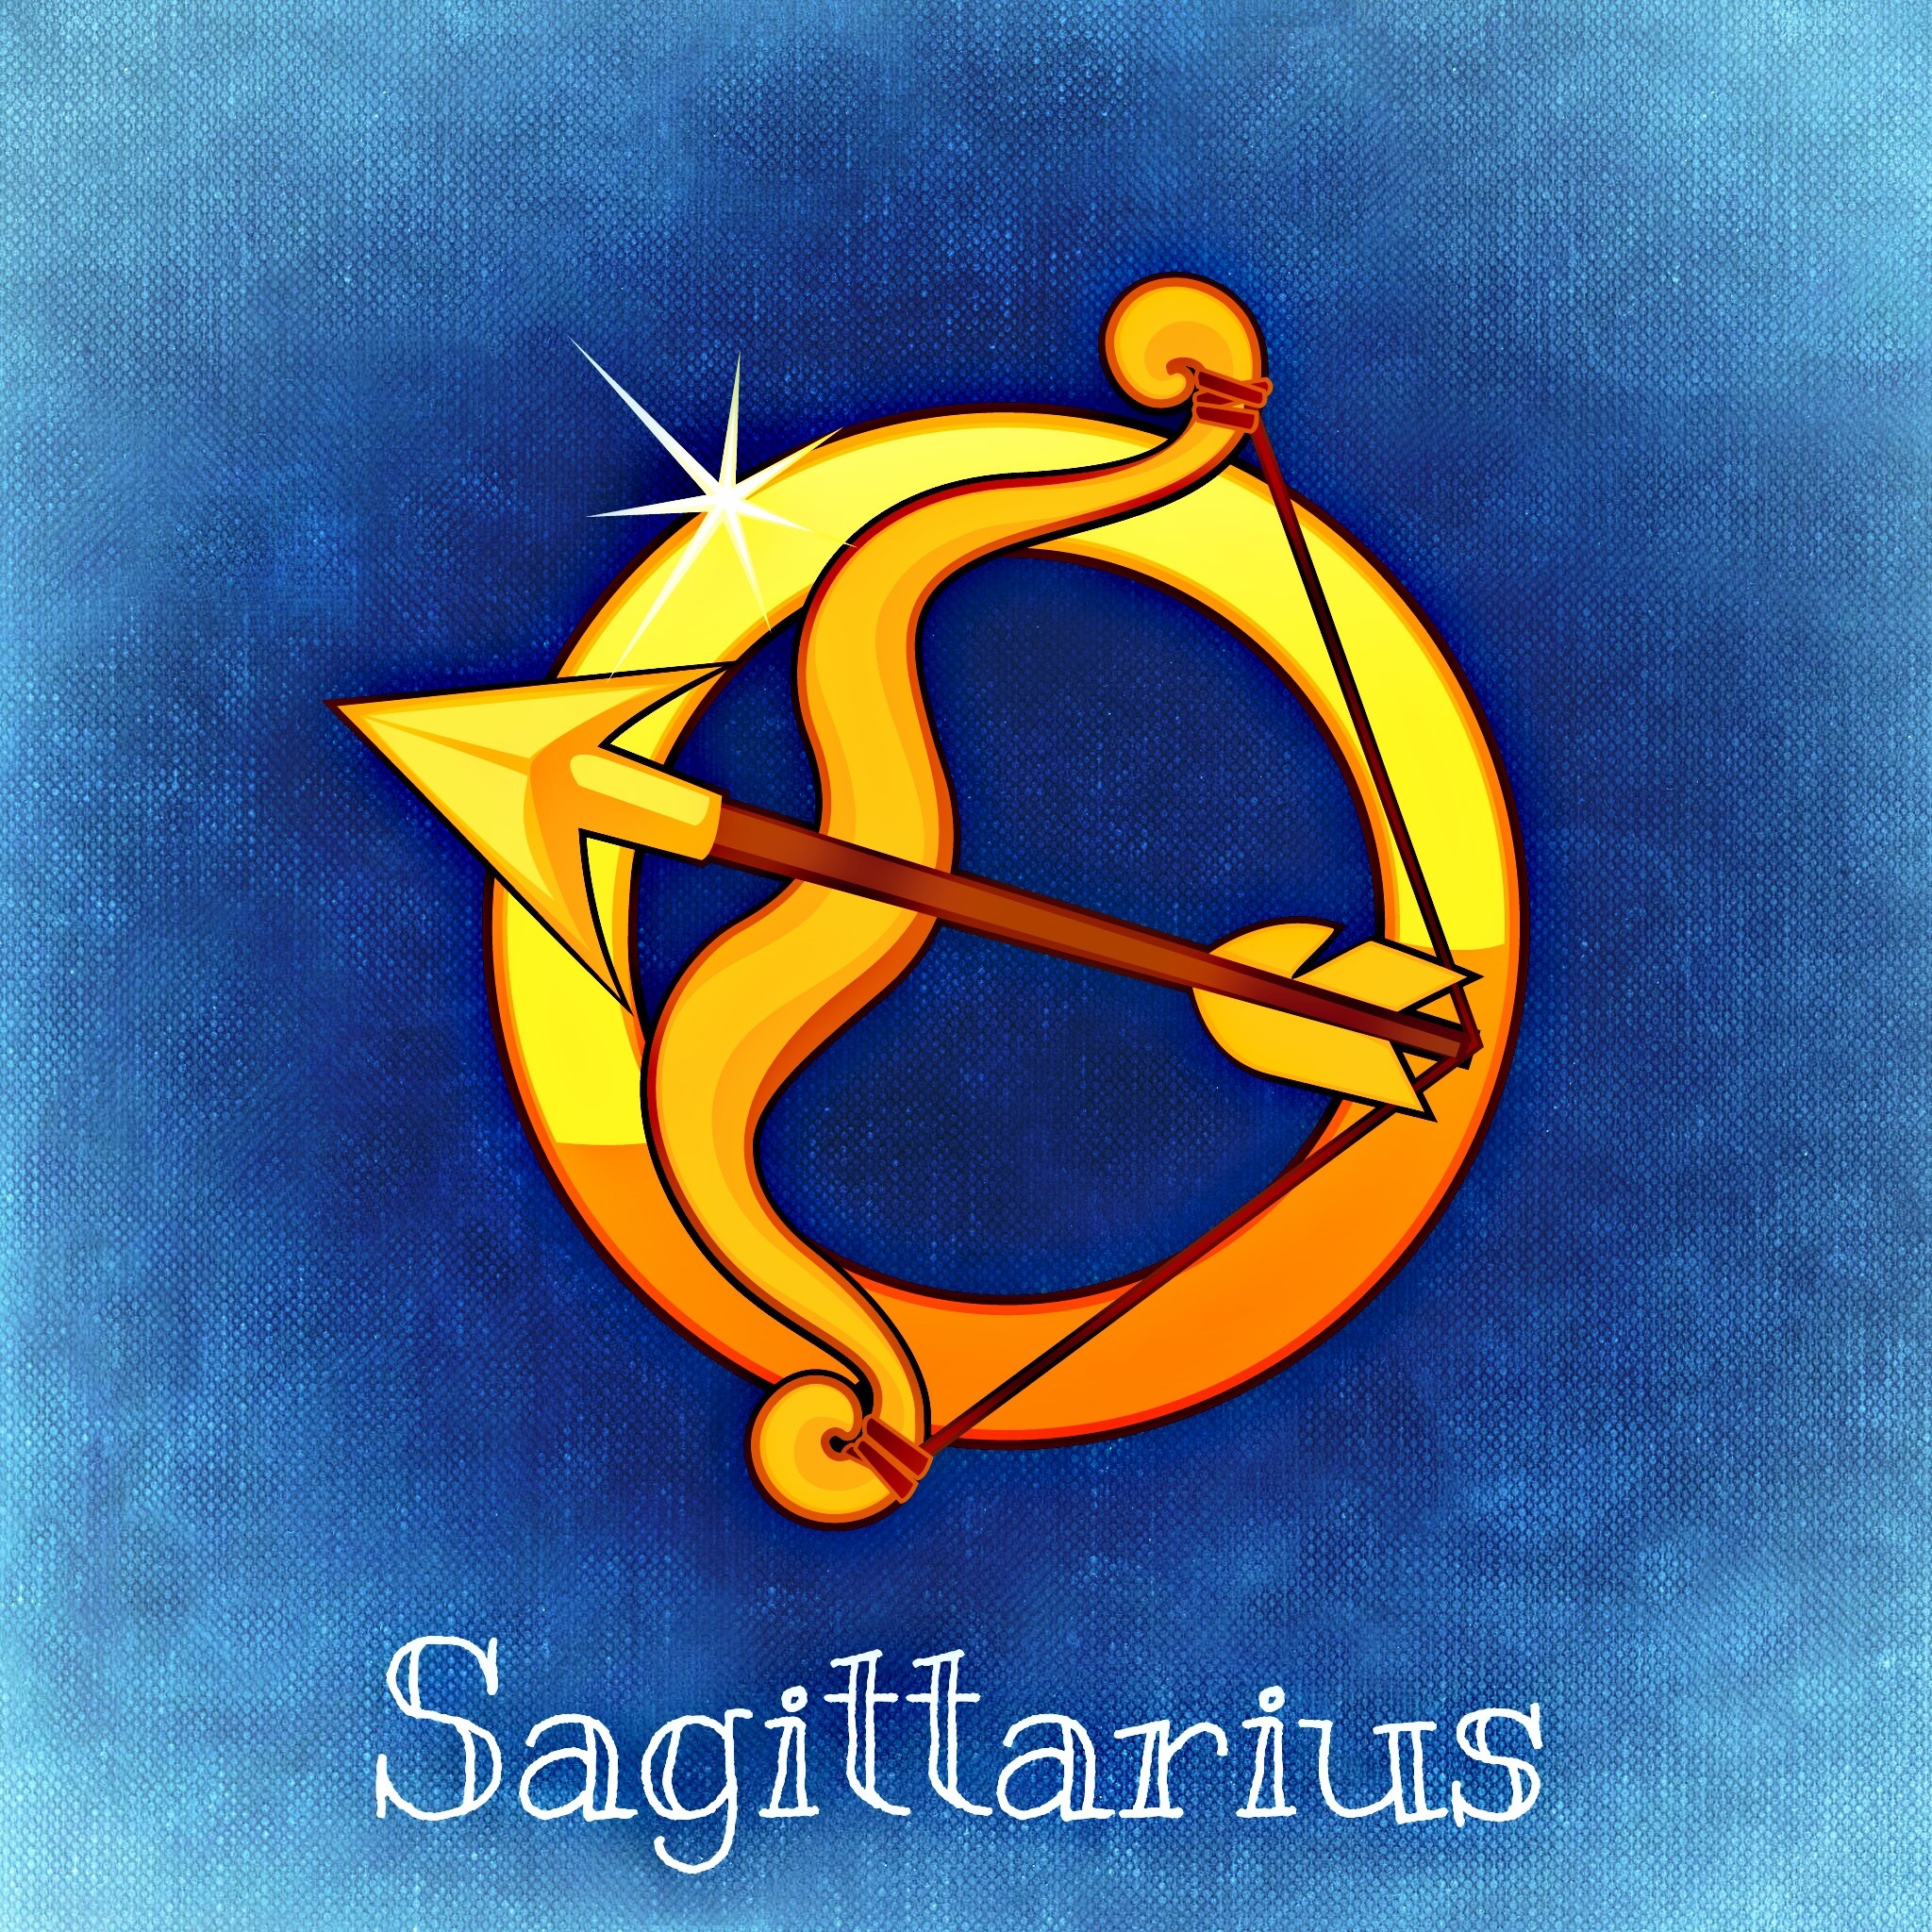 Saggitarius Horoscope - Friendship, Love, Relationship, Career